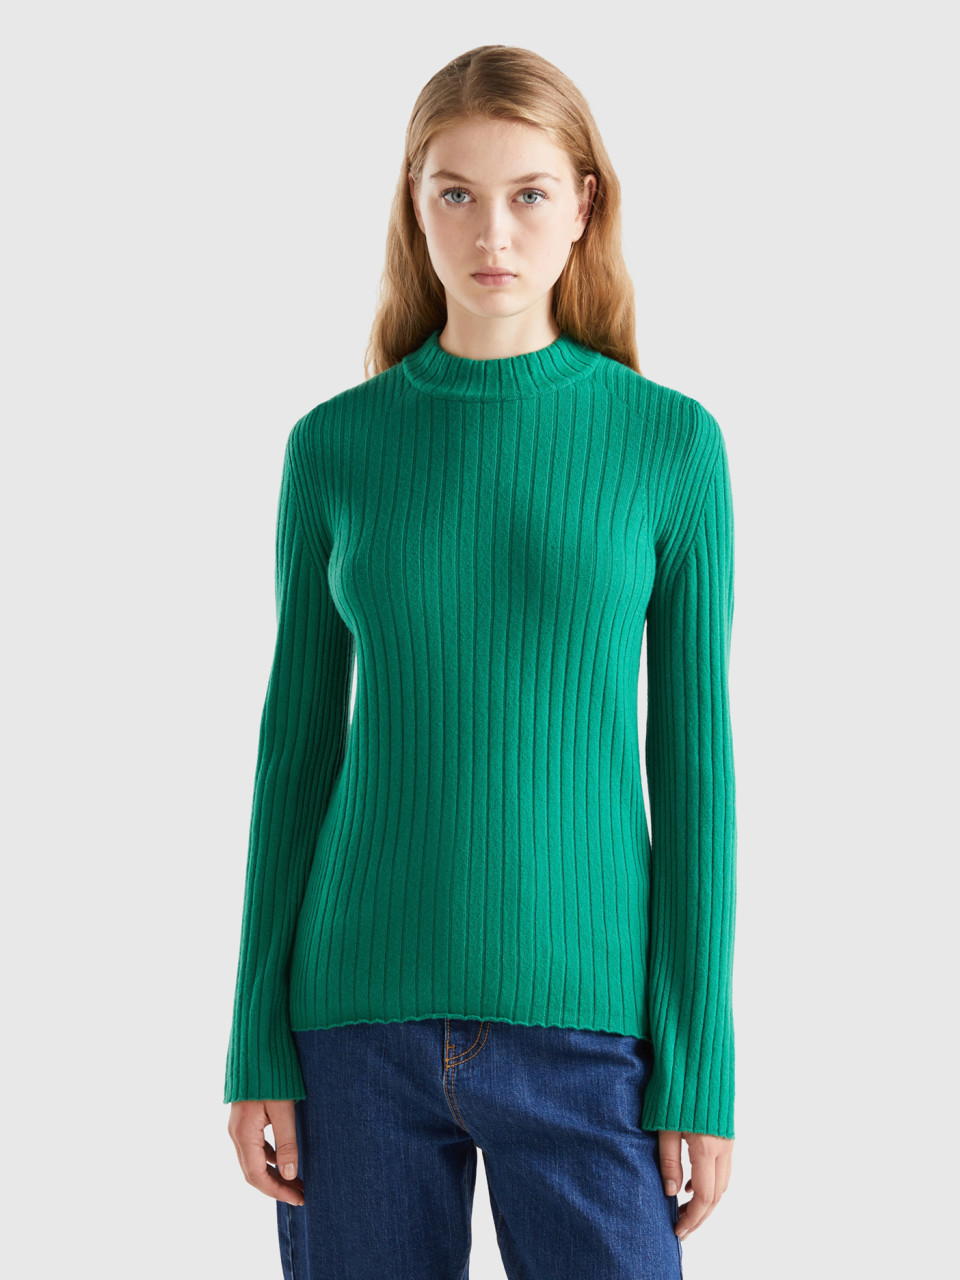 Benetton, Turtleneck Sweater With Slits, Green, Women